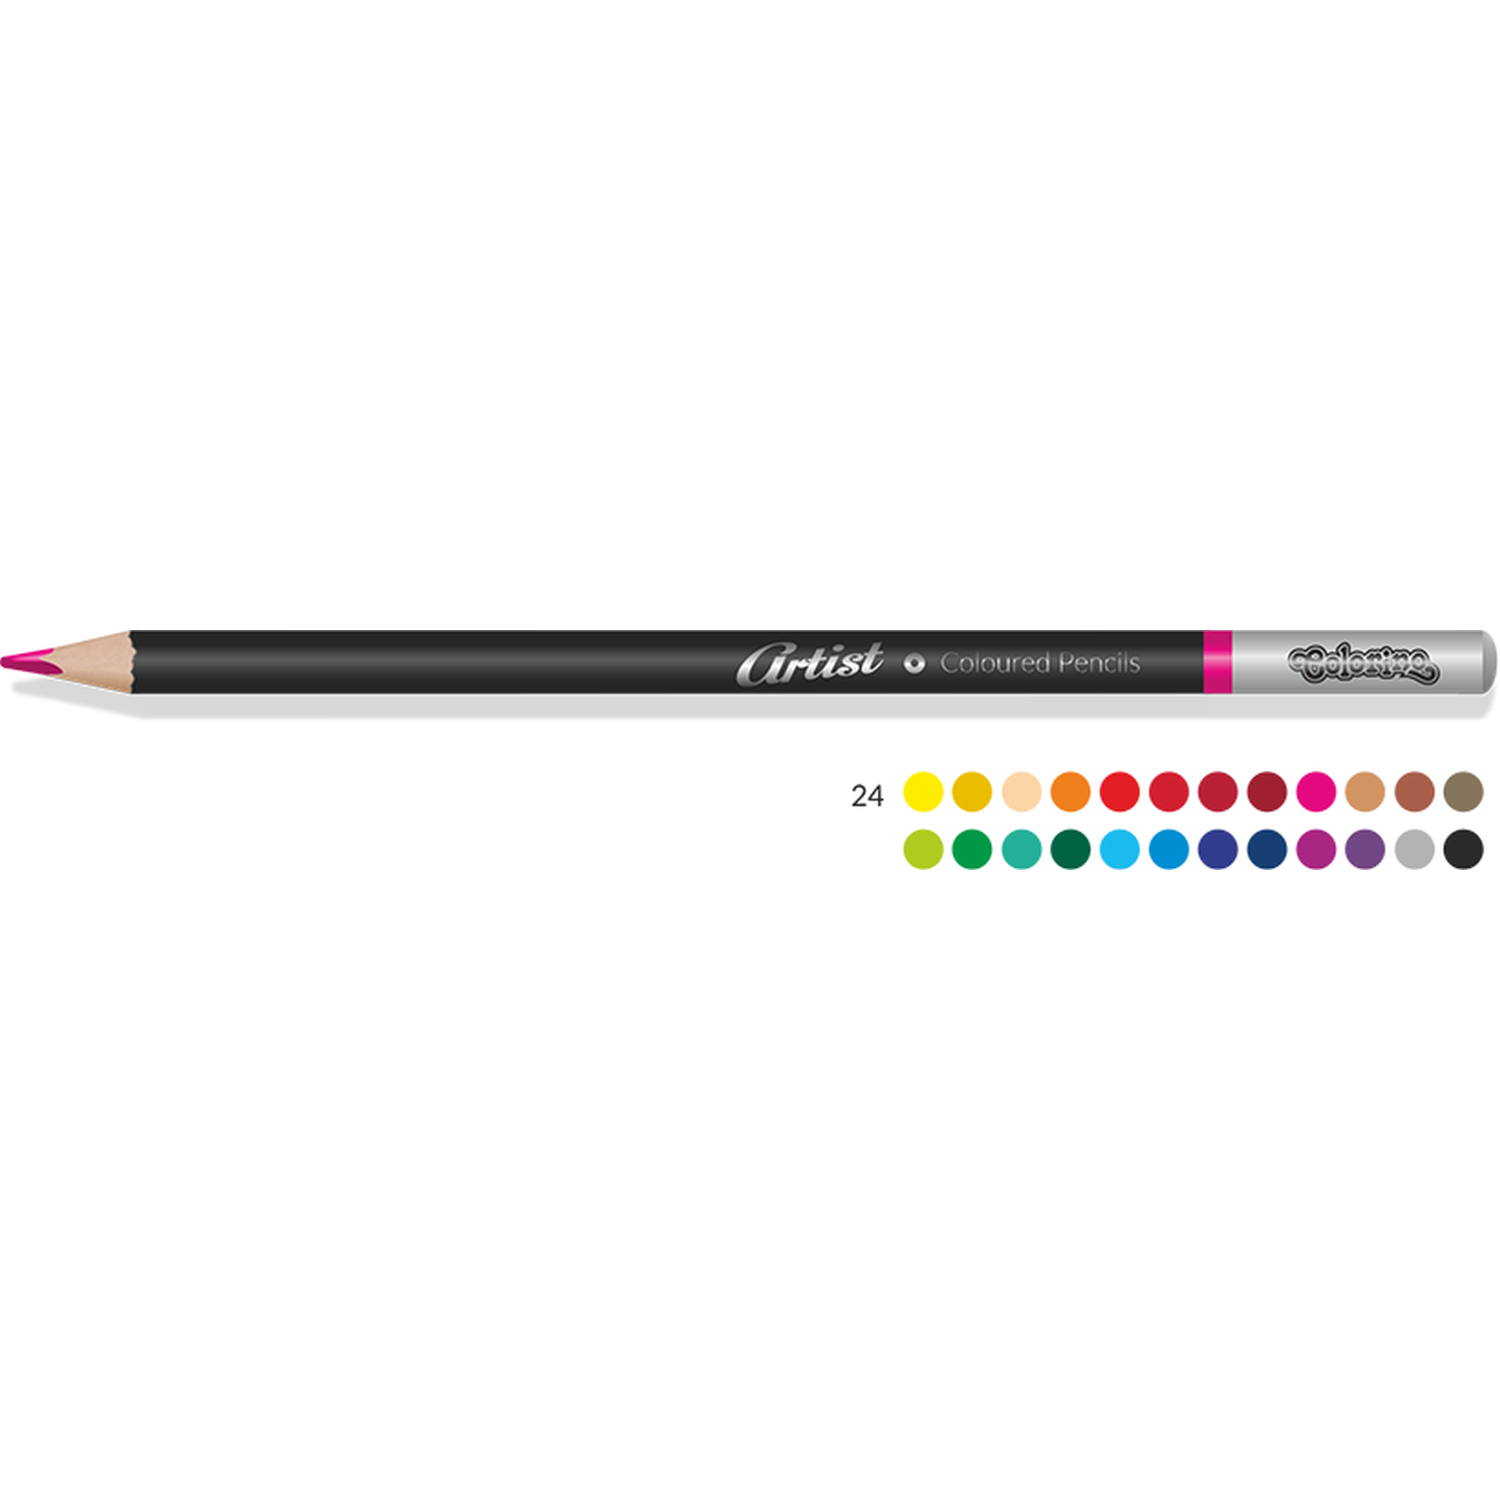 Цветные карандаши COLORINO Artist 24 цвета - фото 2